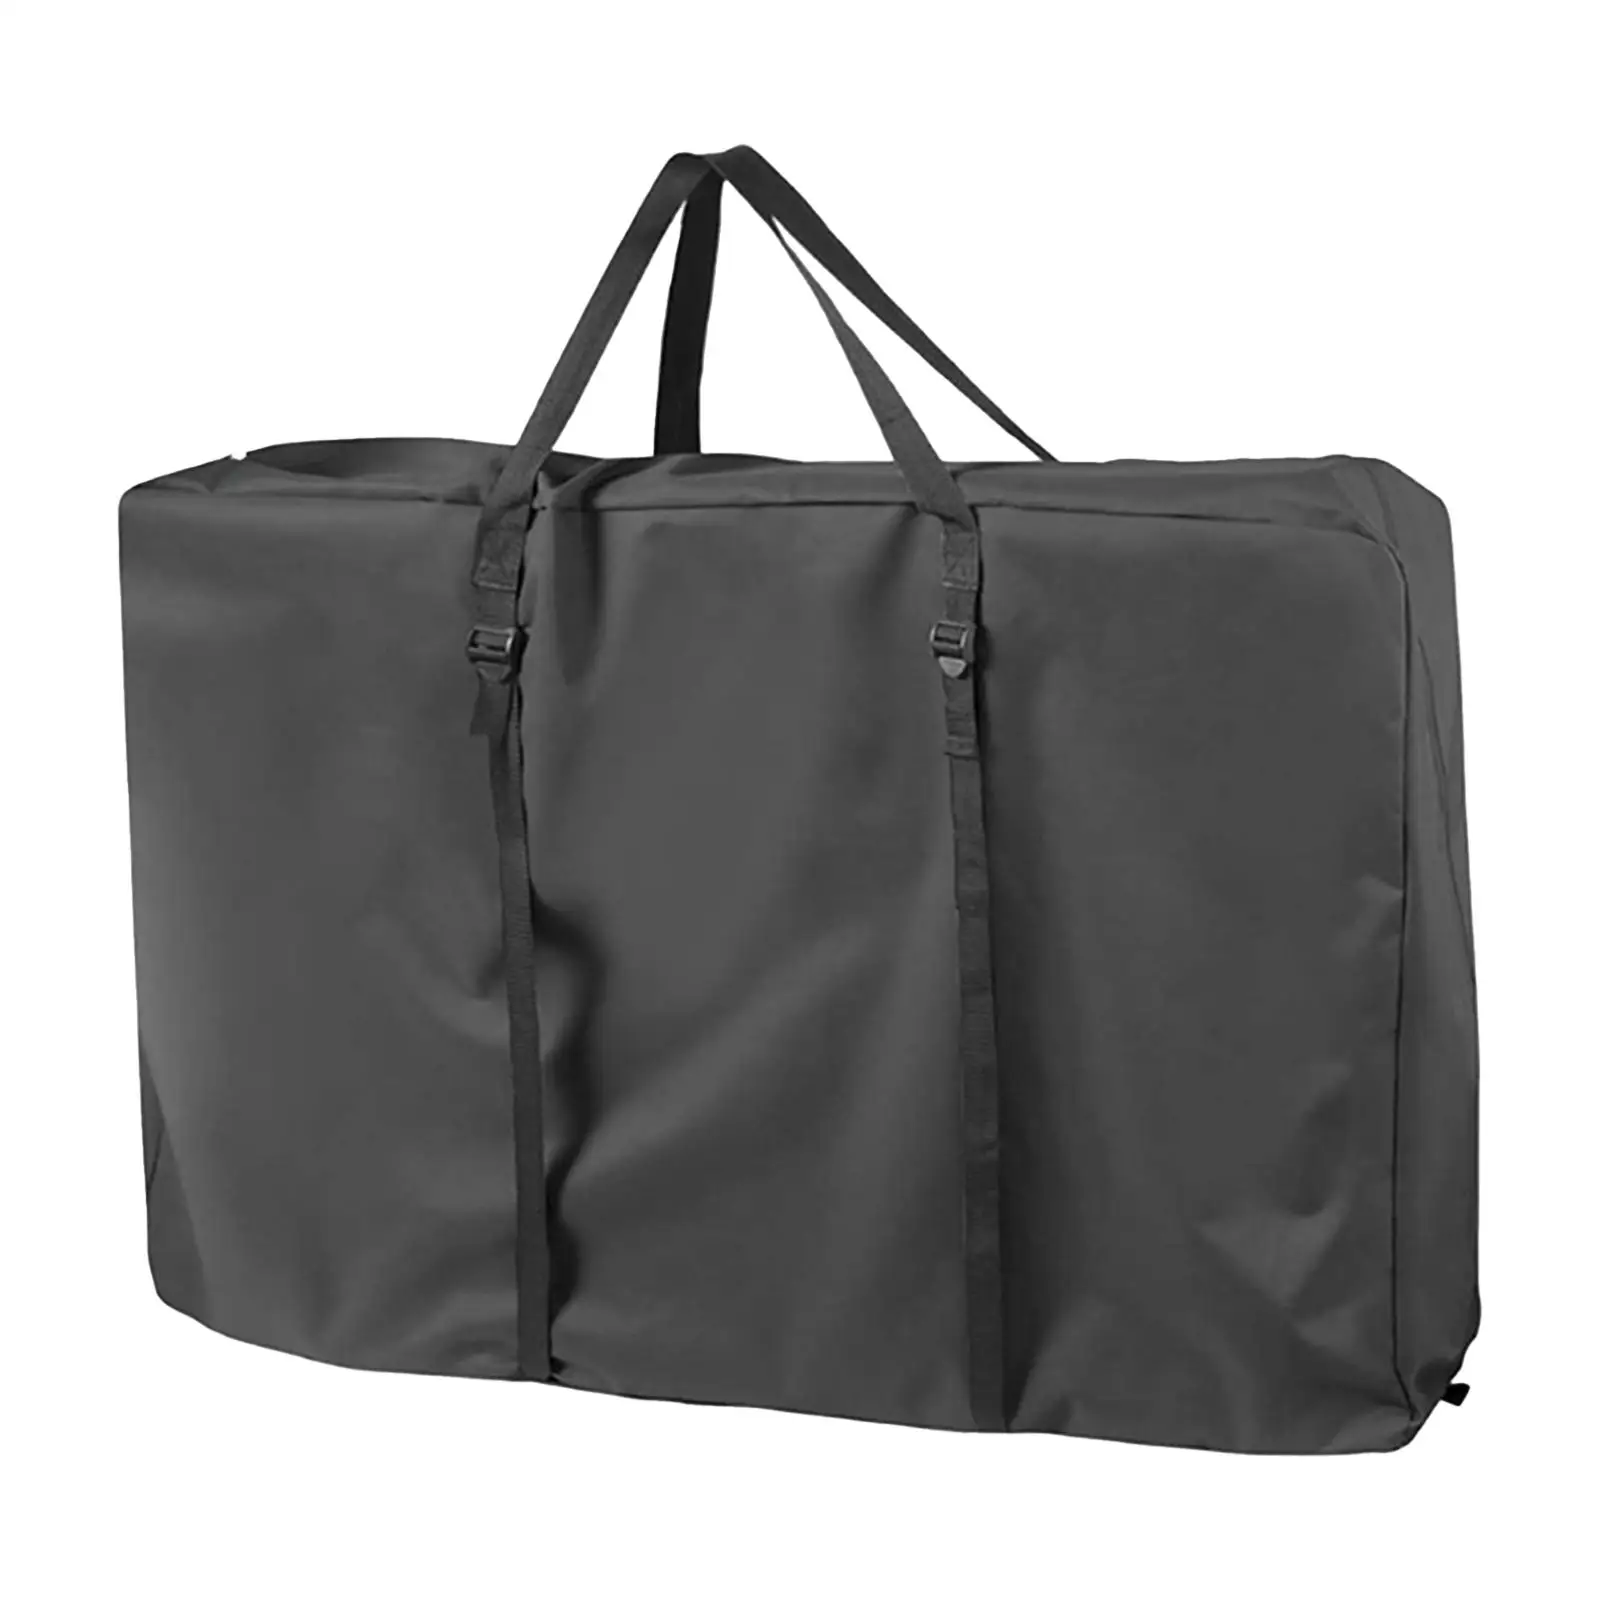 Bag for Wheelchair Sports for Folding Pushchairs Travel Bag Bikes Travel Bag